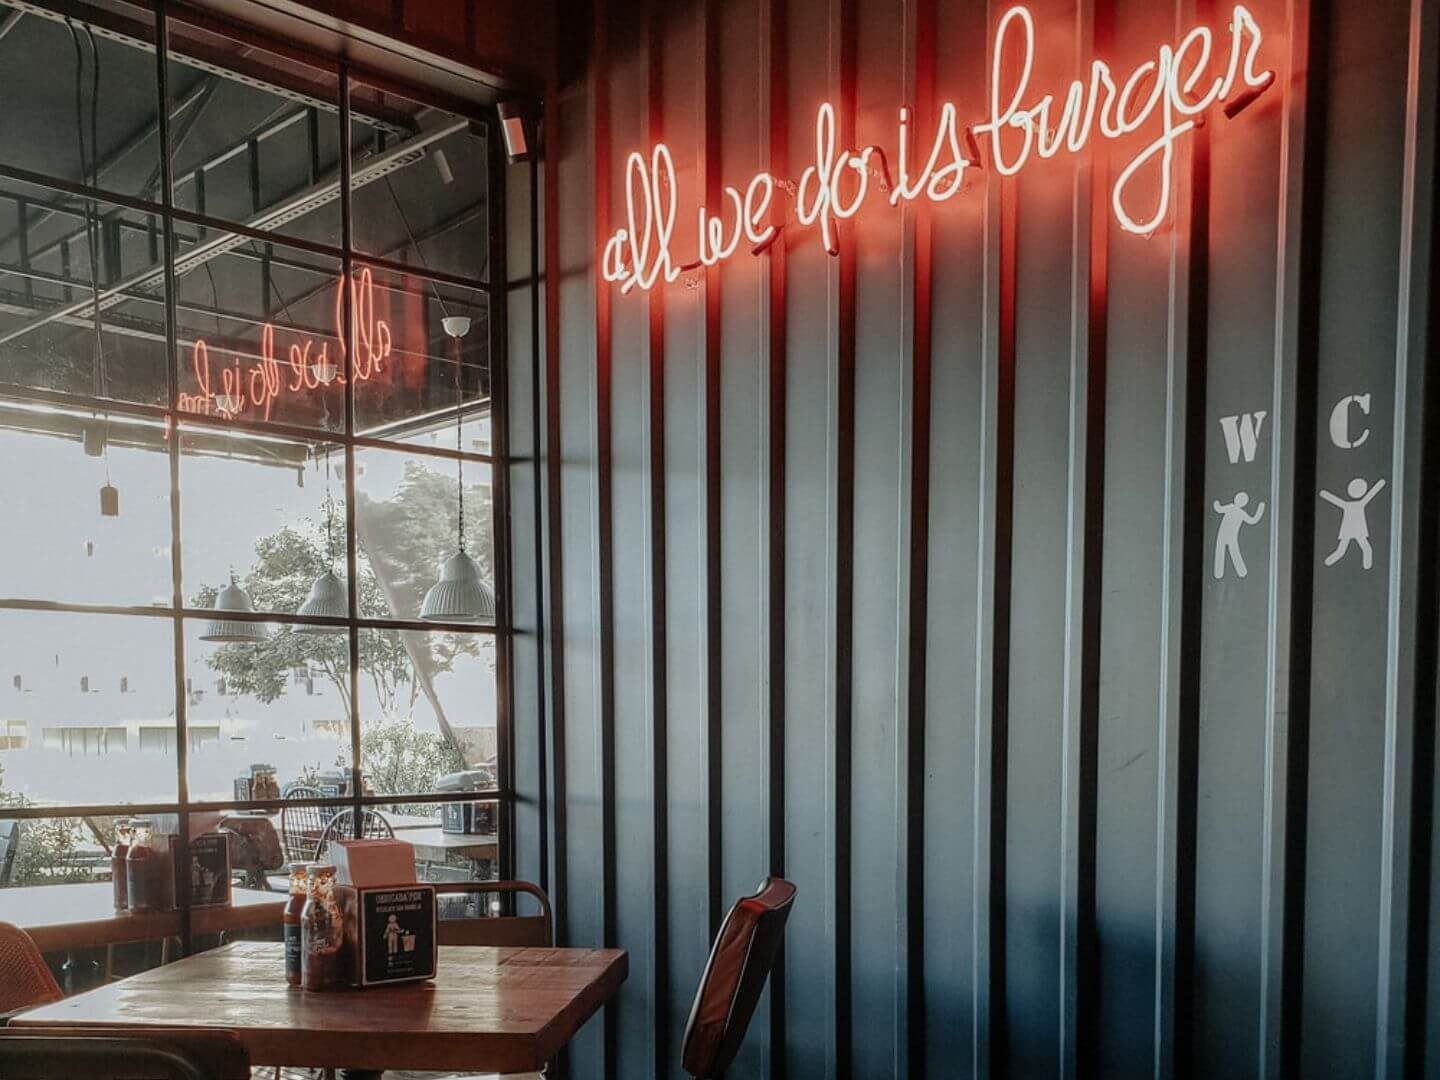 Restaurant Interior Design Typography in Resturant